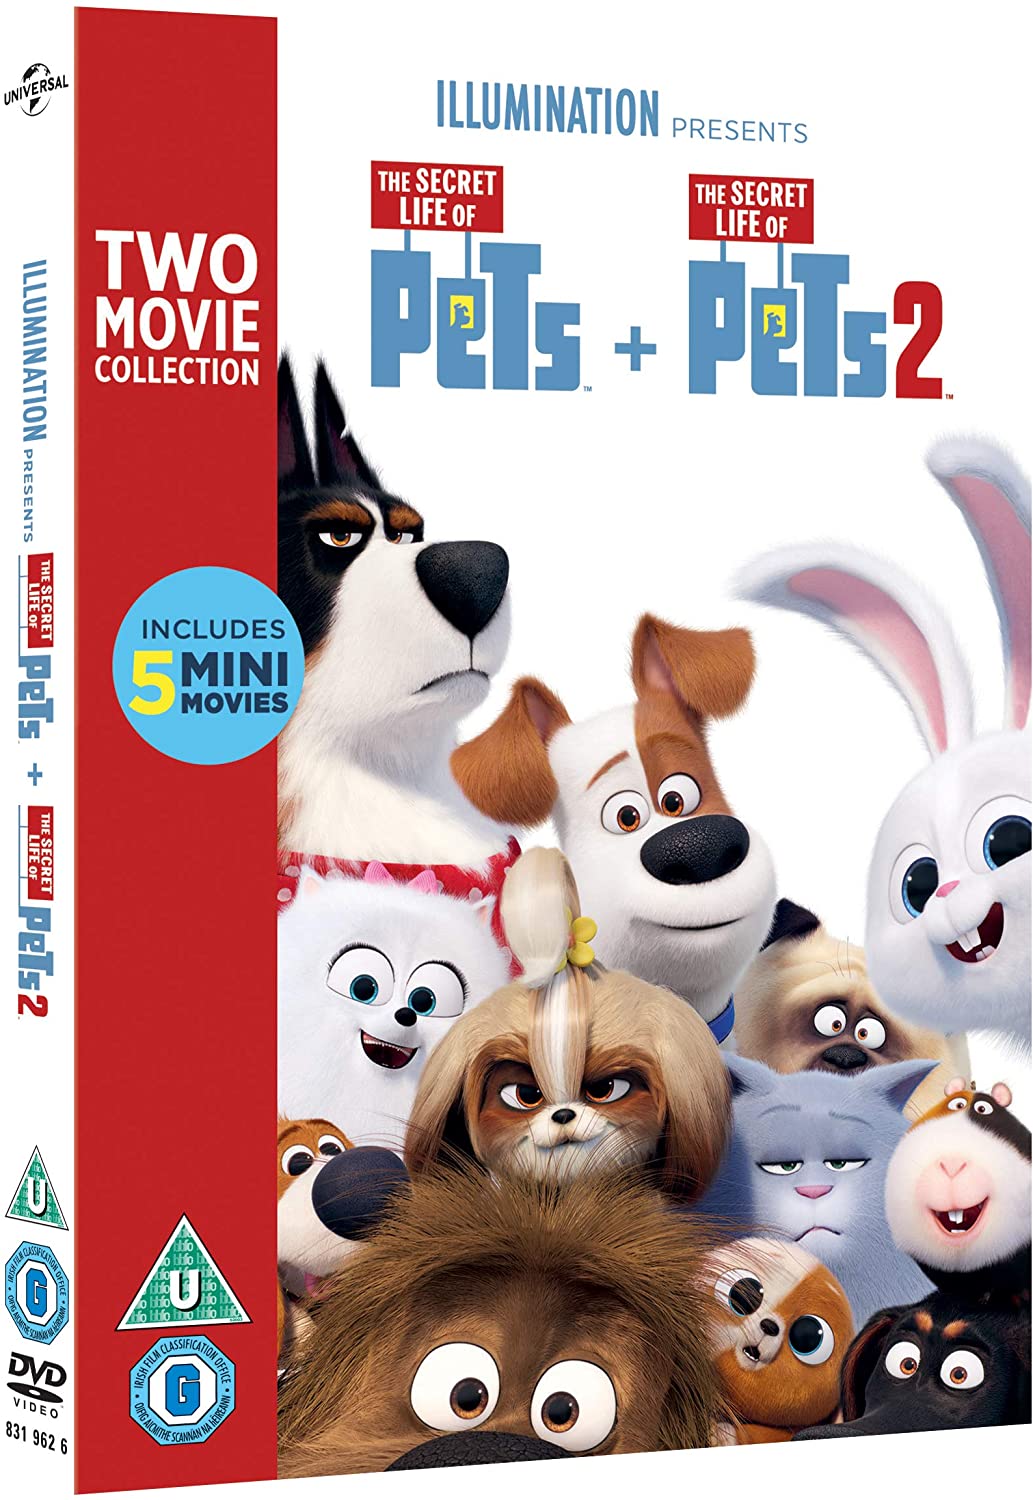 The Secret Life Of Pets 2 Film Collection [2019] (Illumination) (DVD)